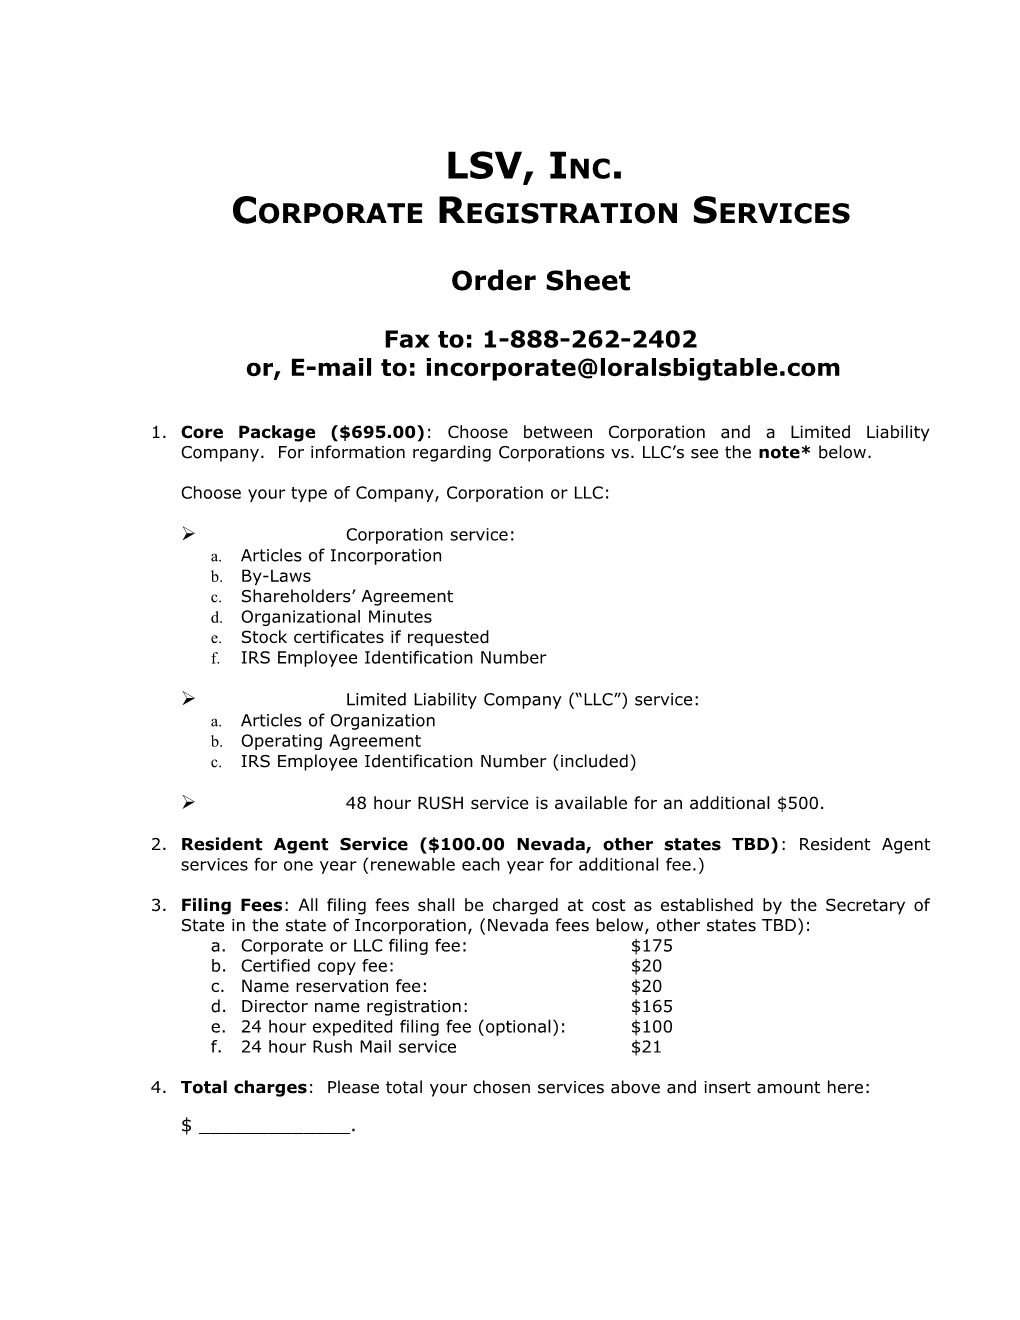 Corporate Registration Services